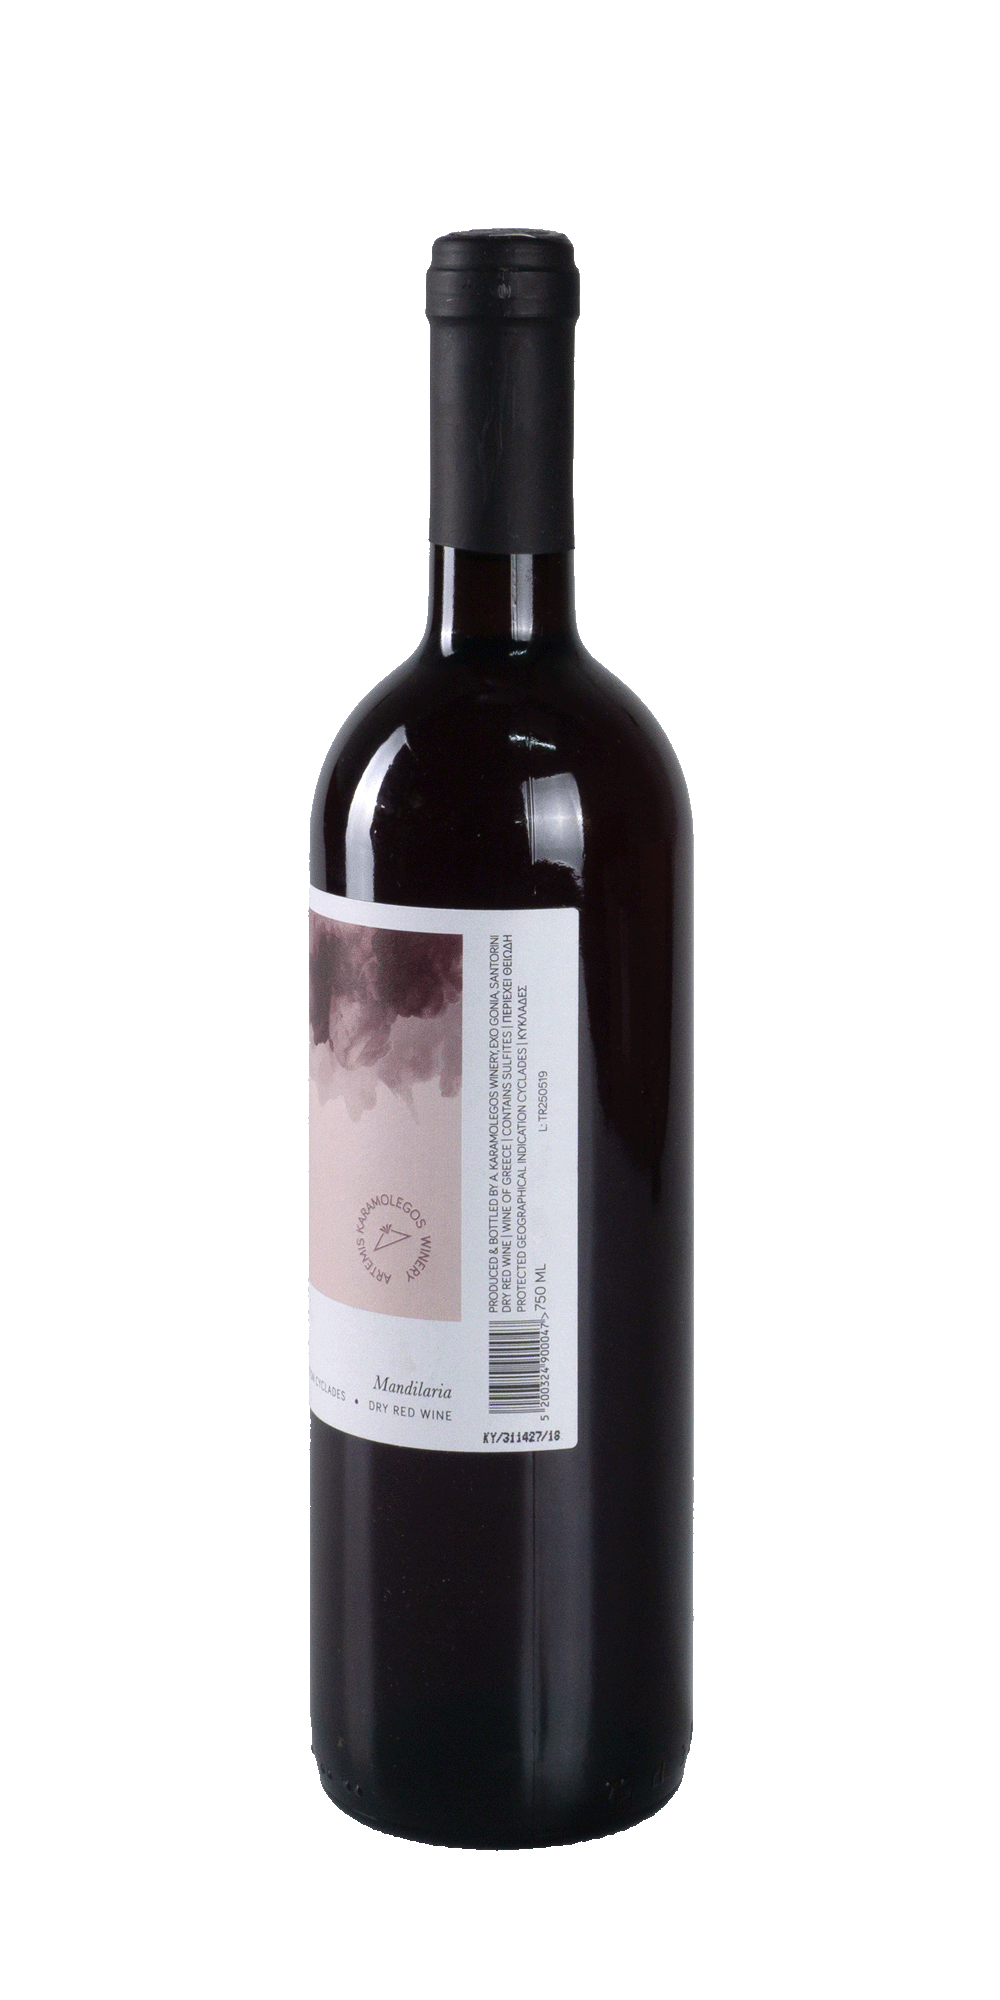 Terra Nera Rot 2020 - Artemis Karamolegos Winery 